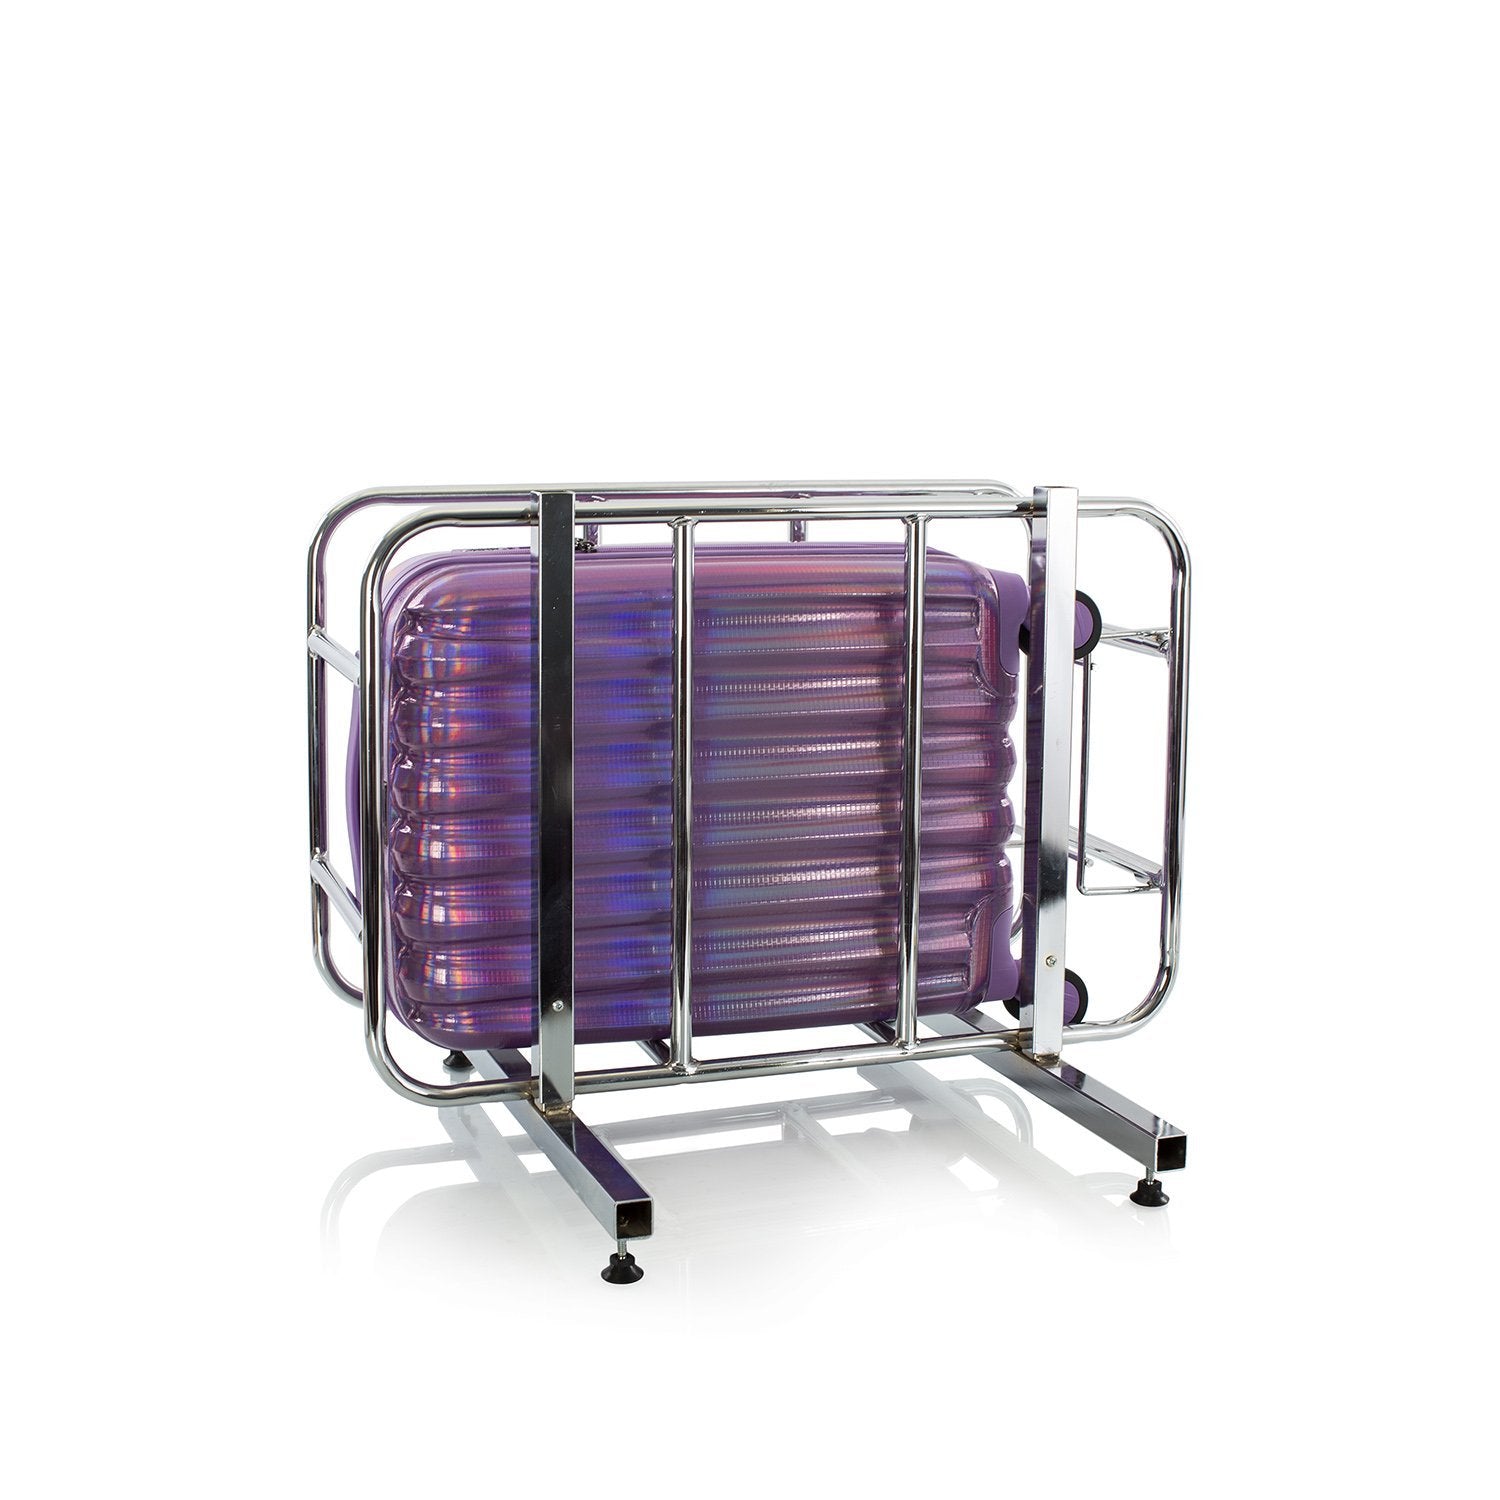 Heys Astro Luggage Spinner 3 Piece Set Purple